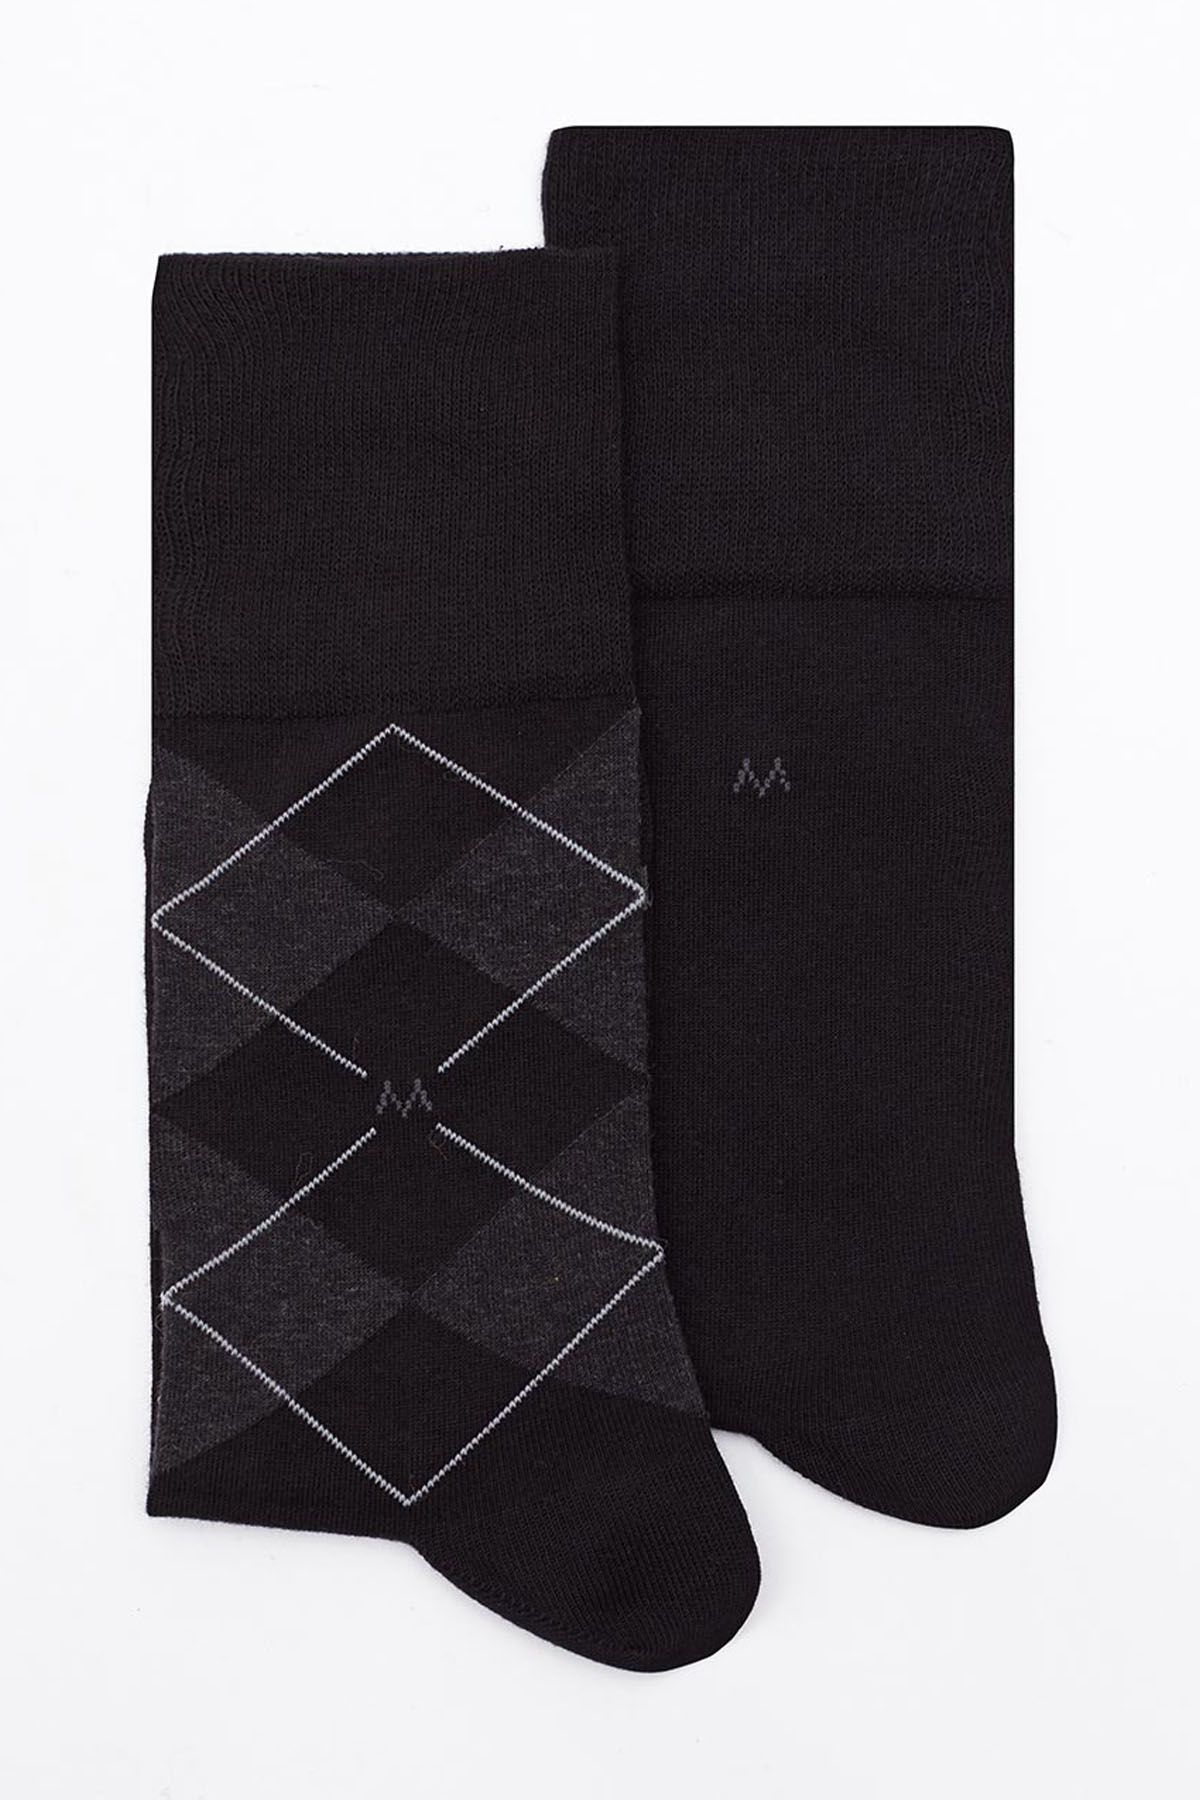 Hemington Baklava Desenli Siyah Pamuk Ikili Çorap Seti